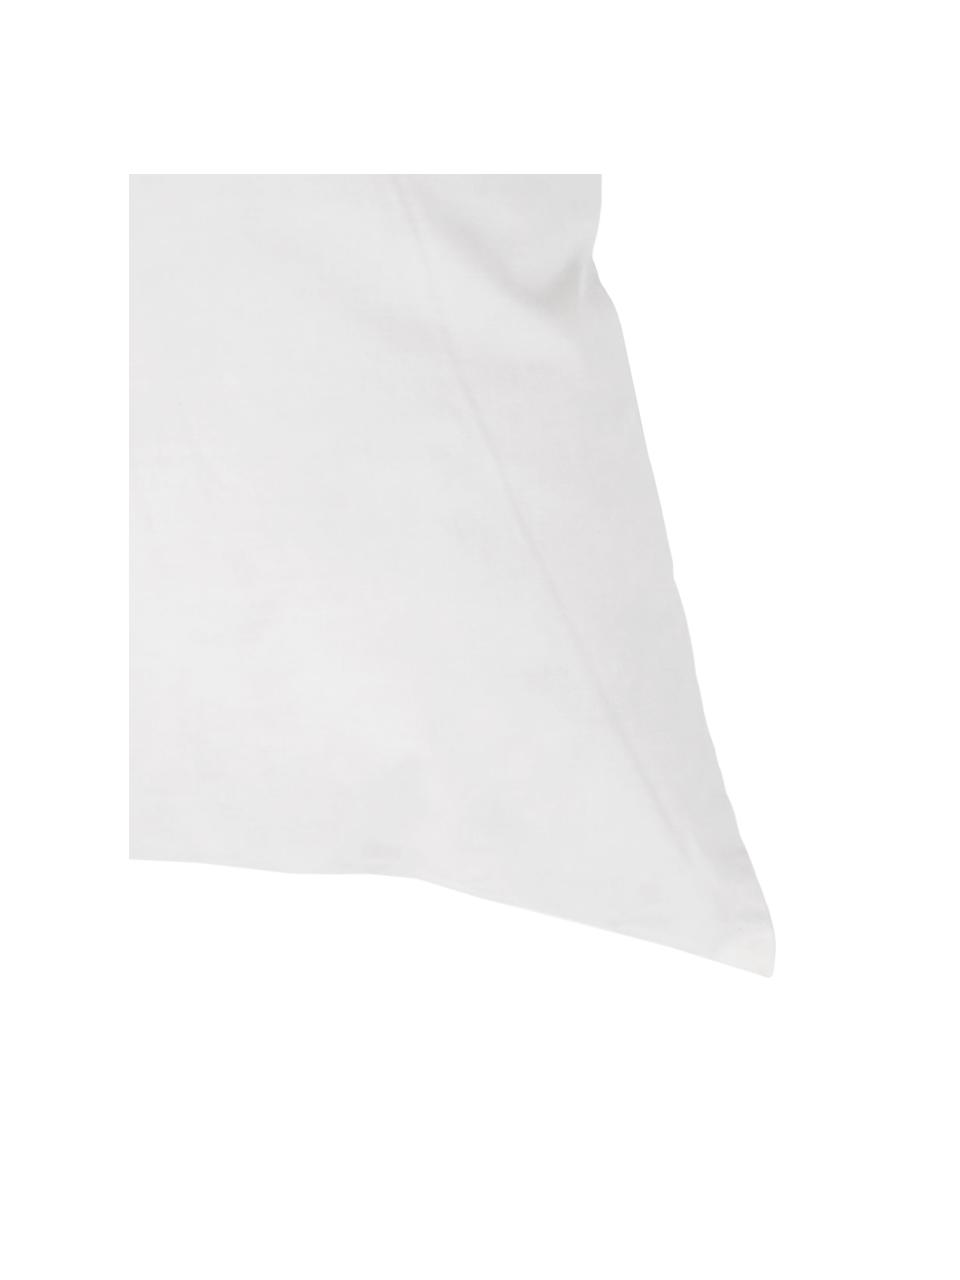 Relleno de cojín Premium, 30 x 50, Funda: percal Mako, 100% algodón, Blanco, An 30 x L 50 cm